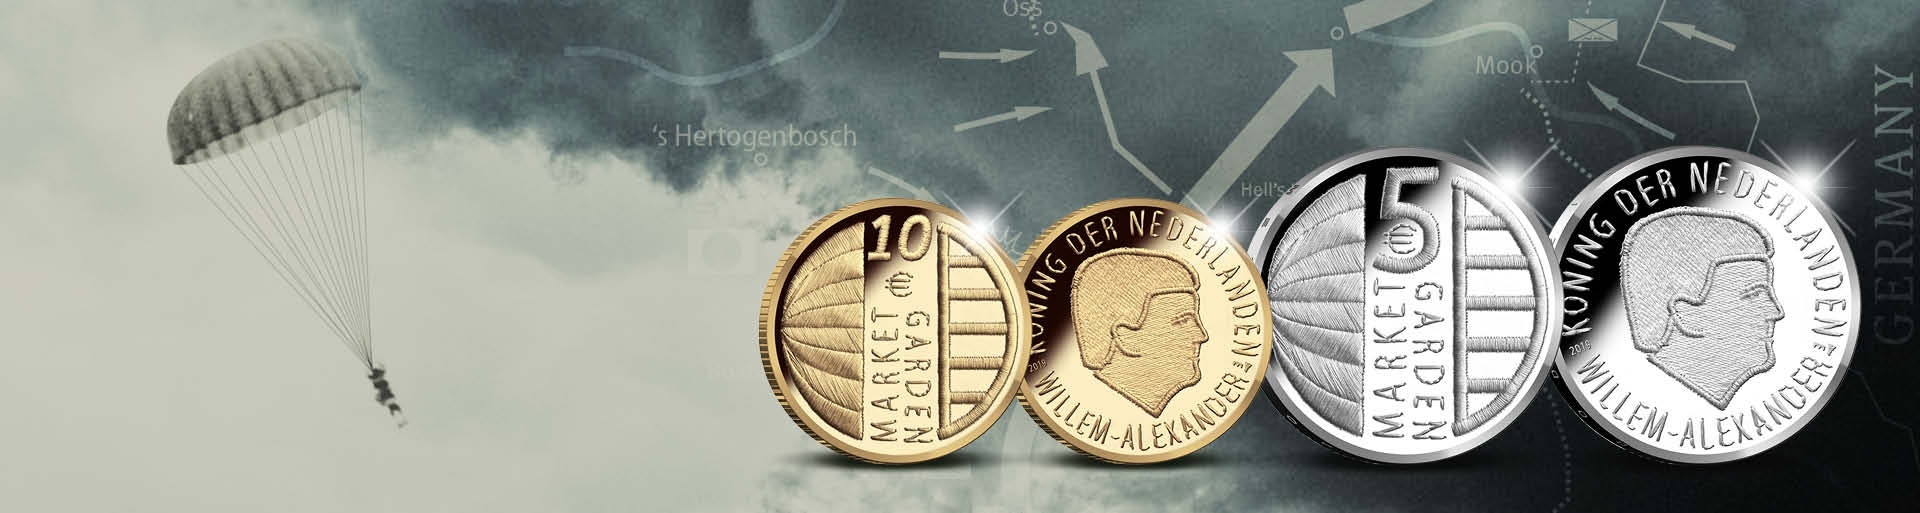 Royal Dutch Mint 75th anniversary of the Operation Market Garden 2019 (shop illustration) (zoom)